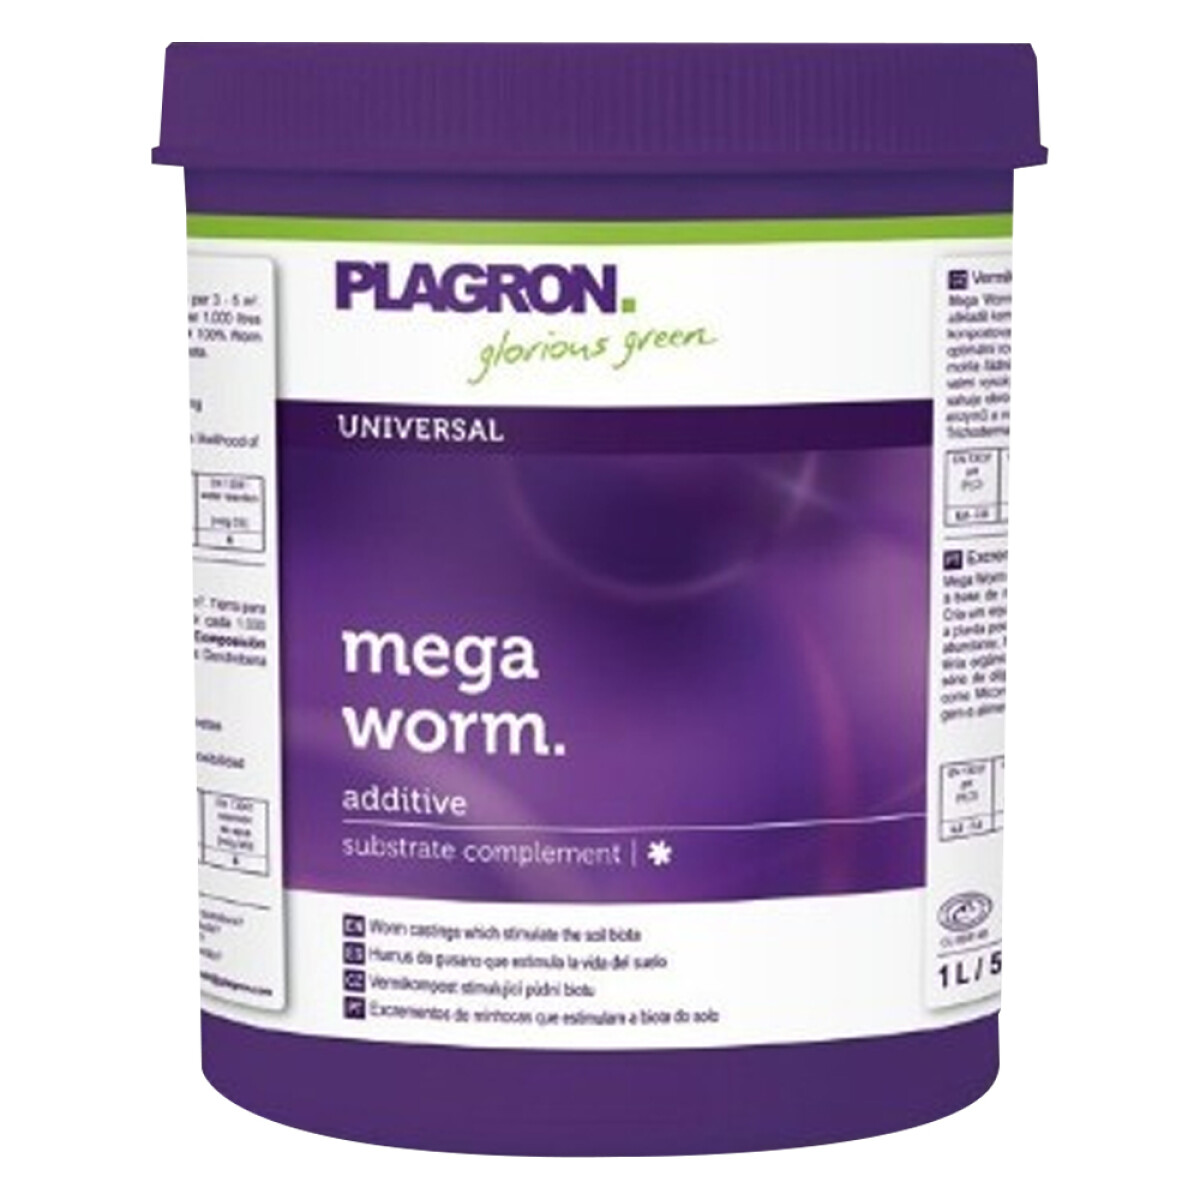 MEGA WORM PLAGRON - 25L 